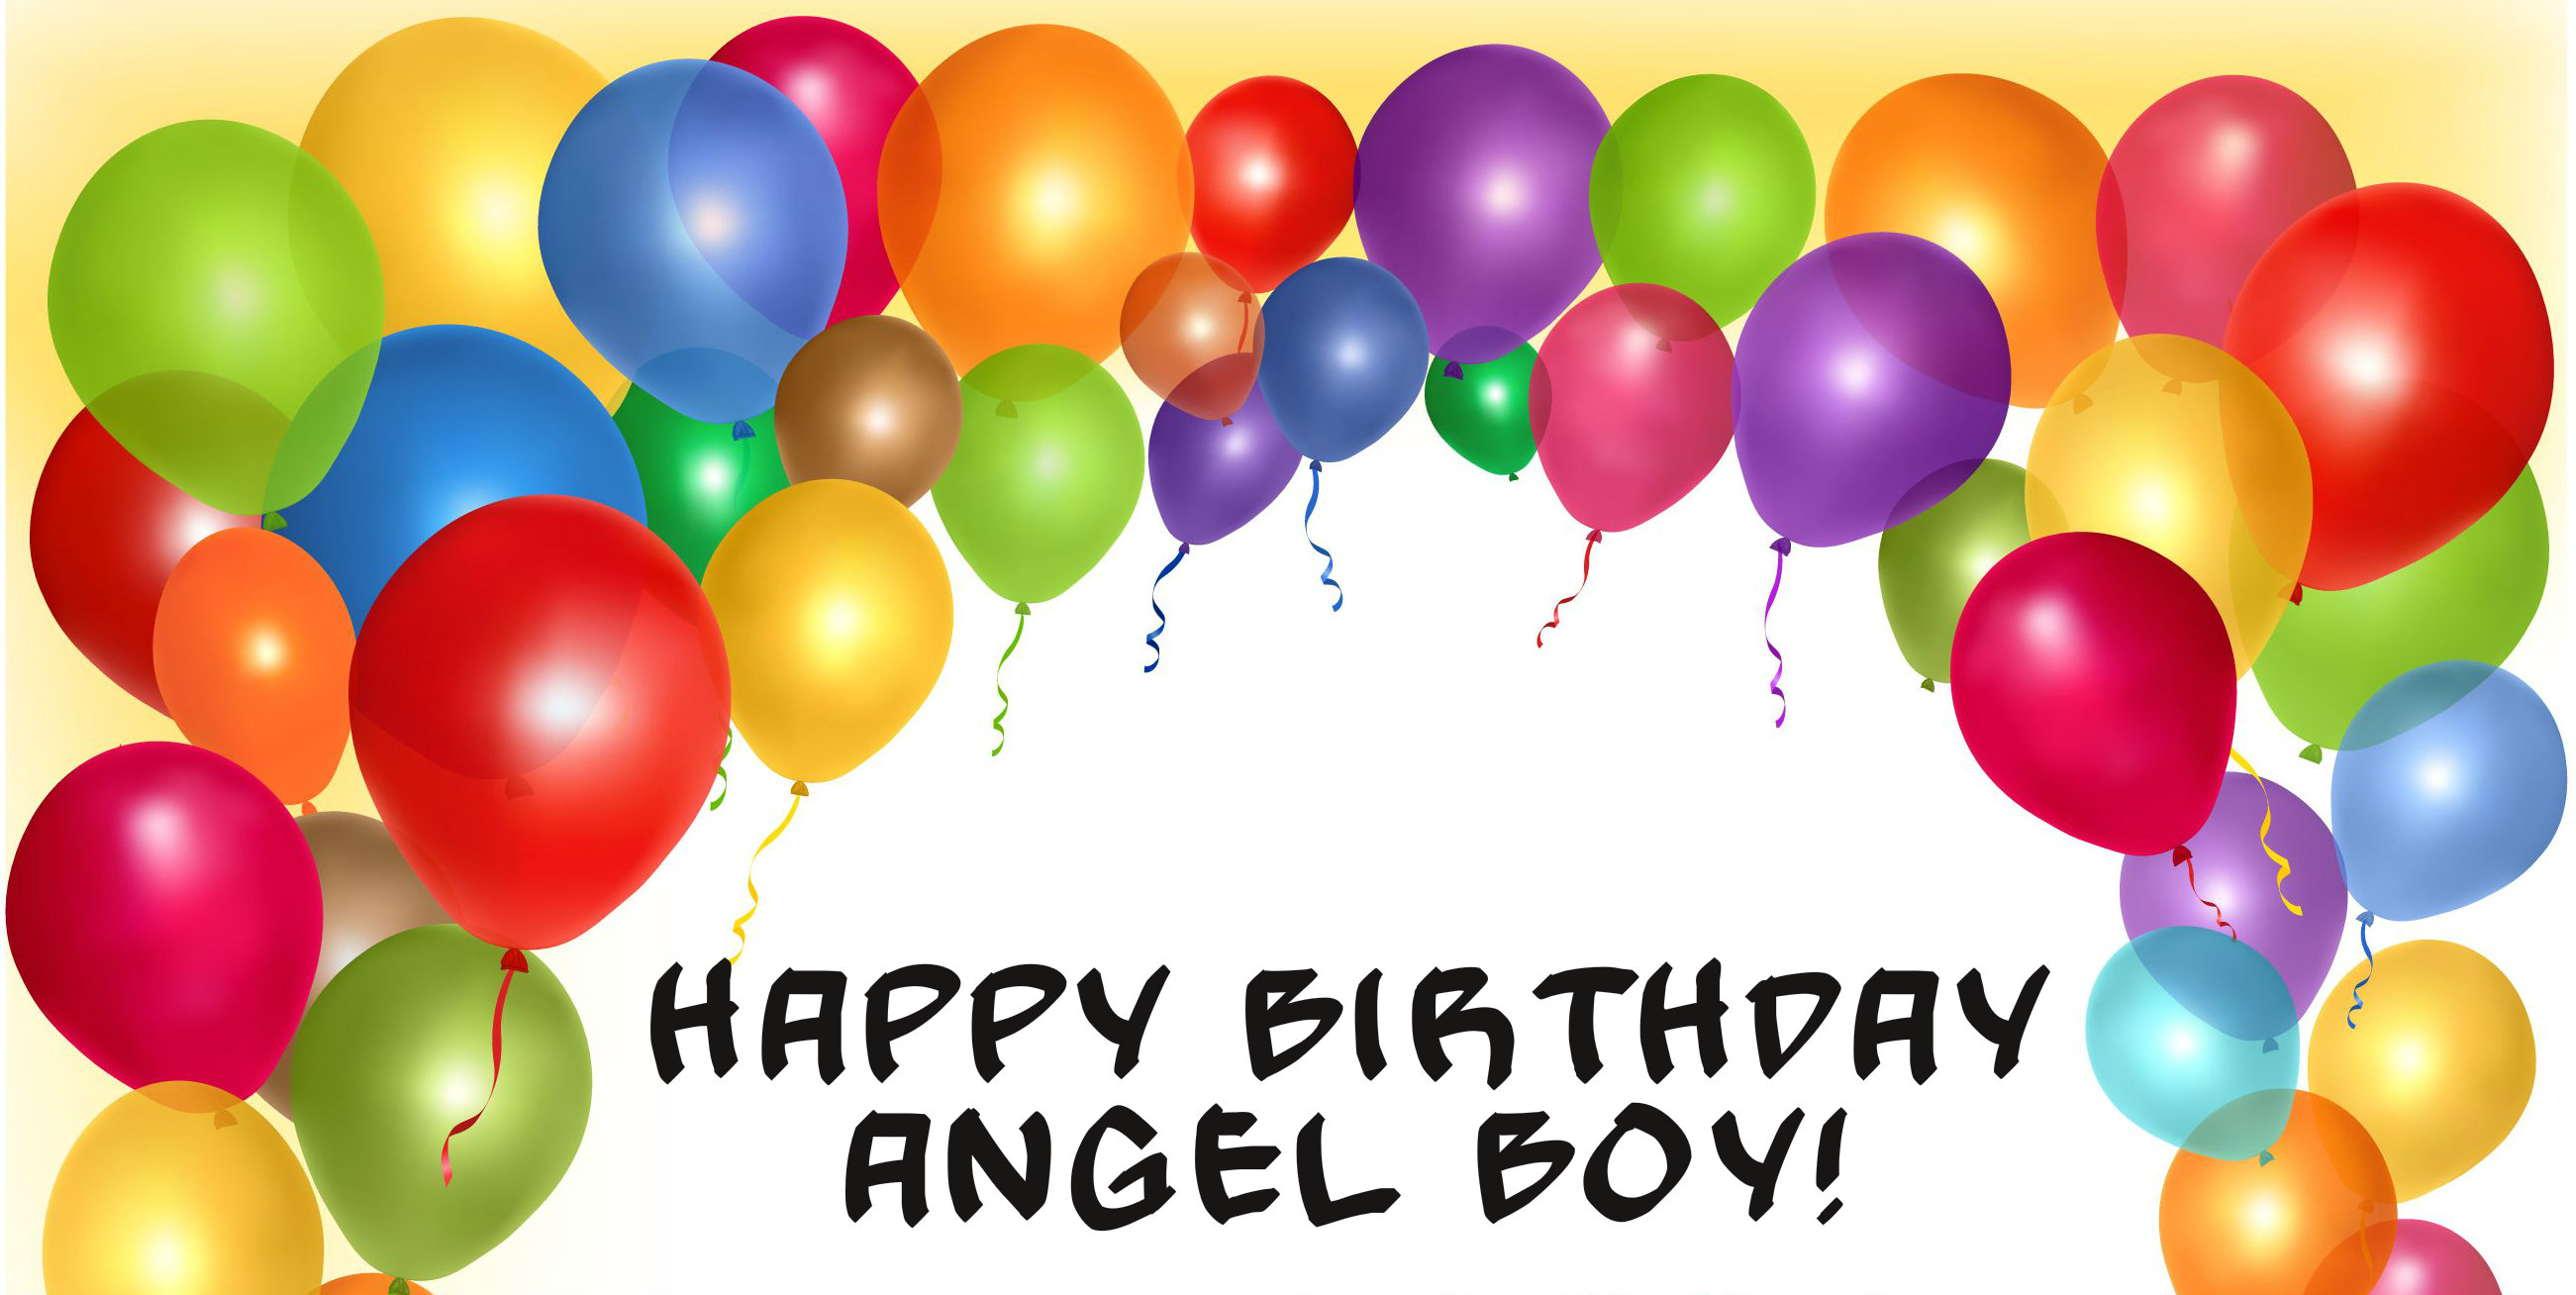 Happy 33rd Birthday Professor Angel Boy